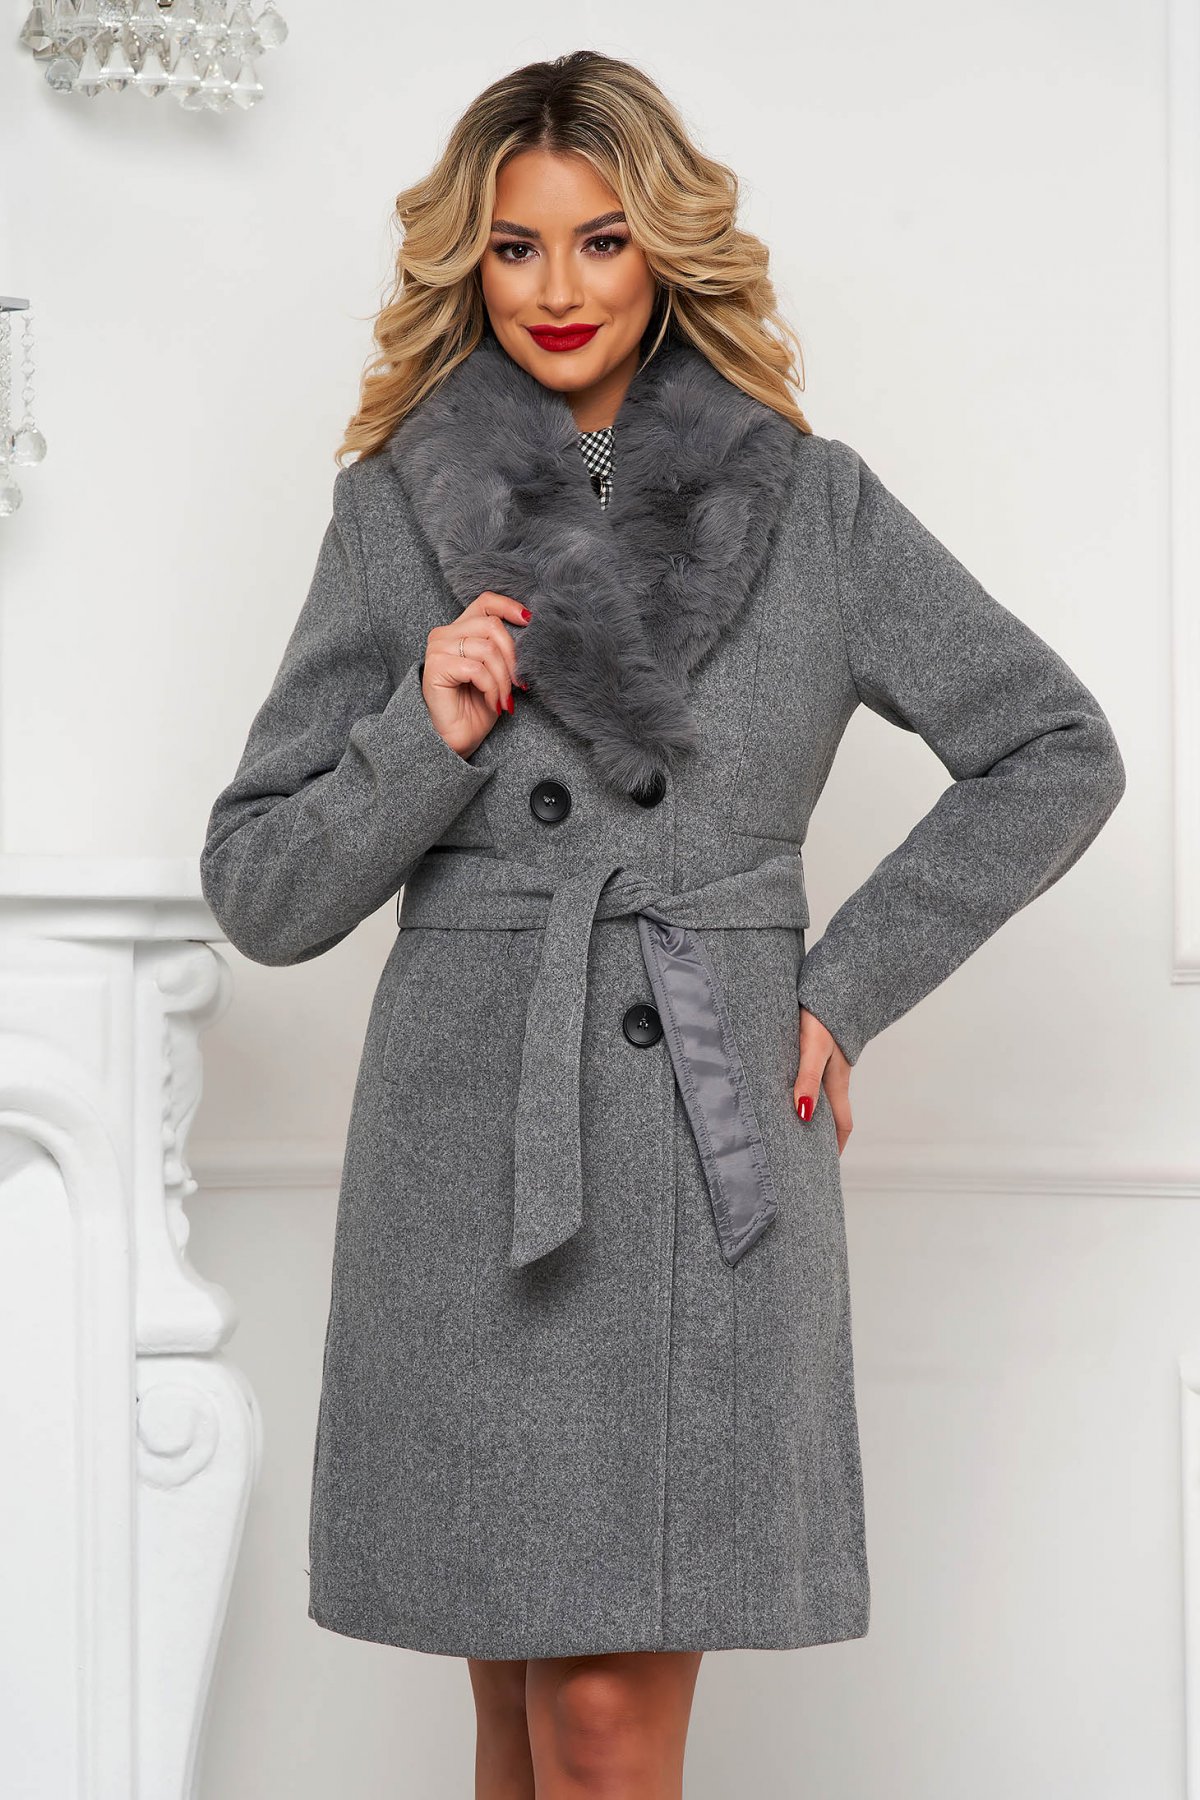 Palton din lana SunShine gri elegant cu blana ecologica detasabila starshiners.ro imagine 2022 13clothing.ro